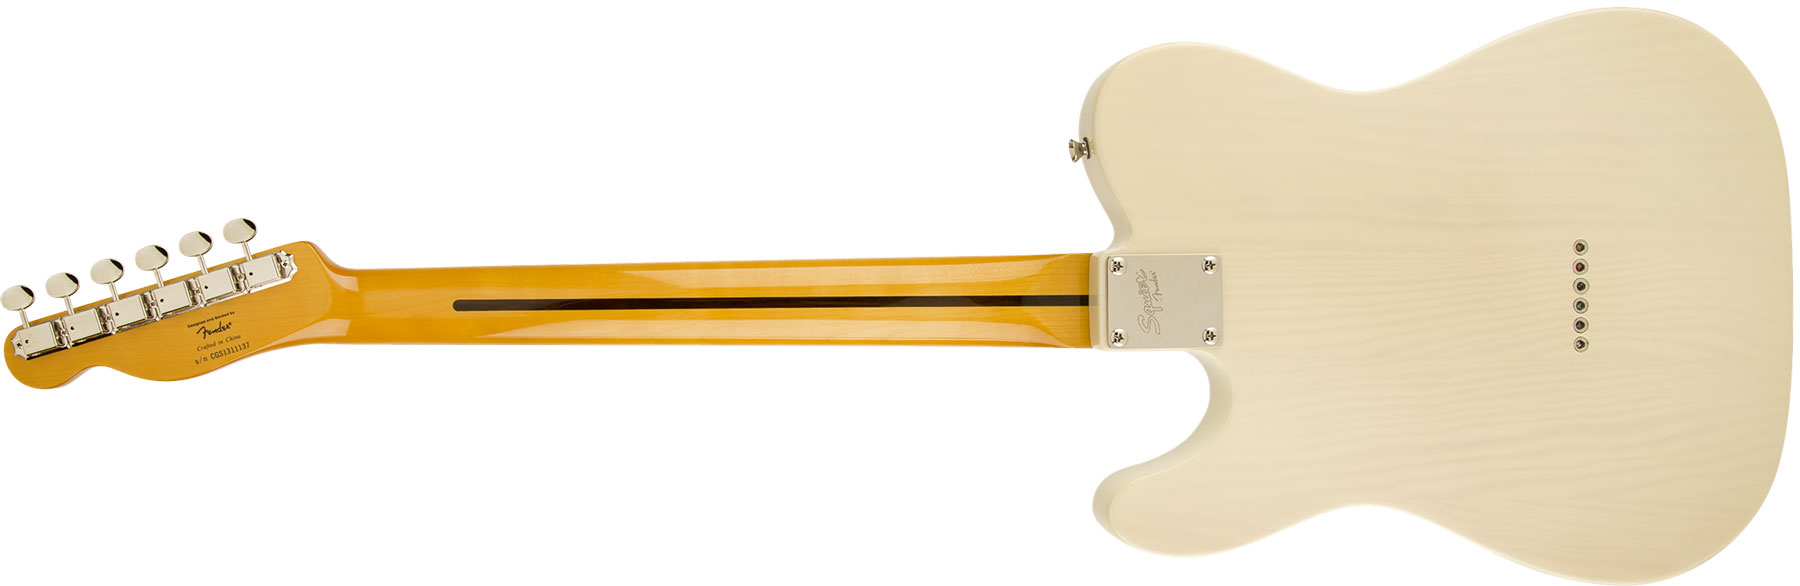 Squier Classic Vibe Telecaster '50s Mn - Vintage Blonde - Televorm elektrische gitaar - Variation 1